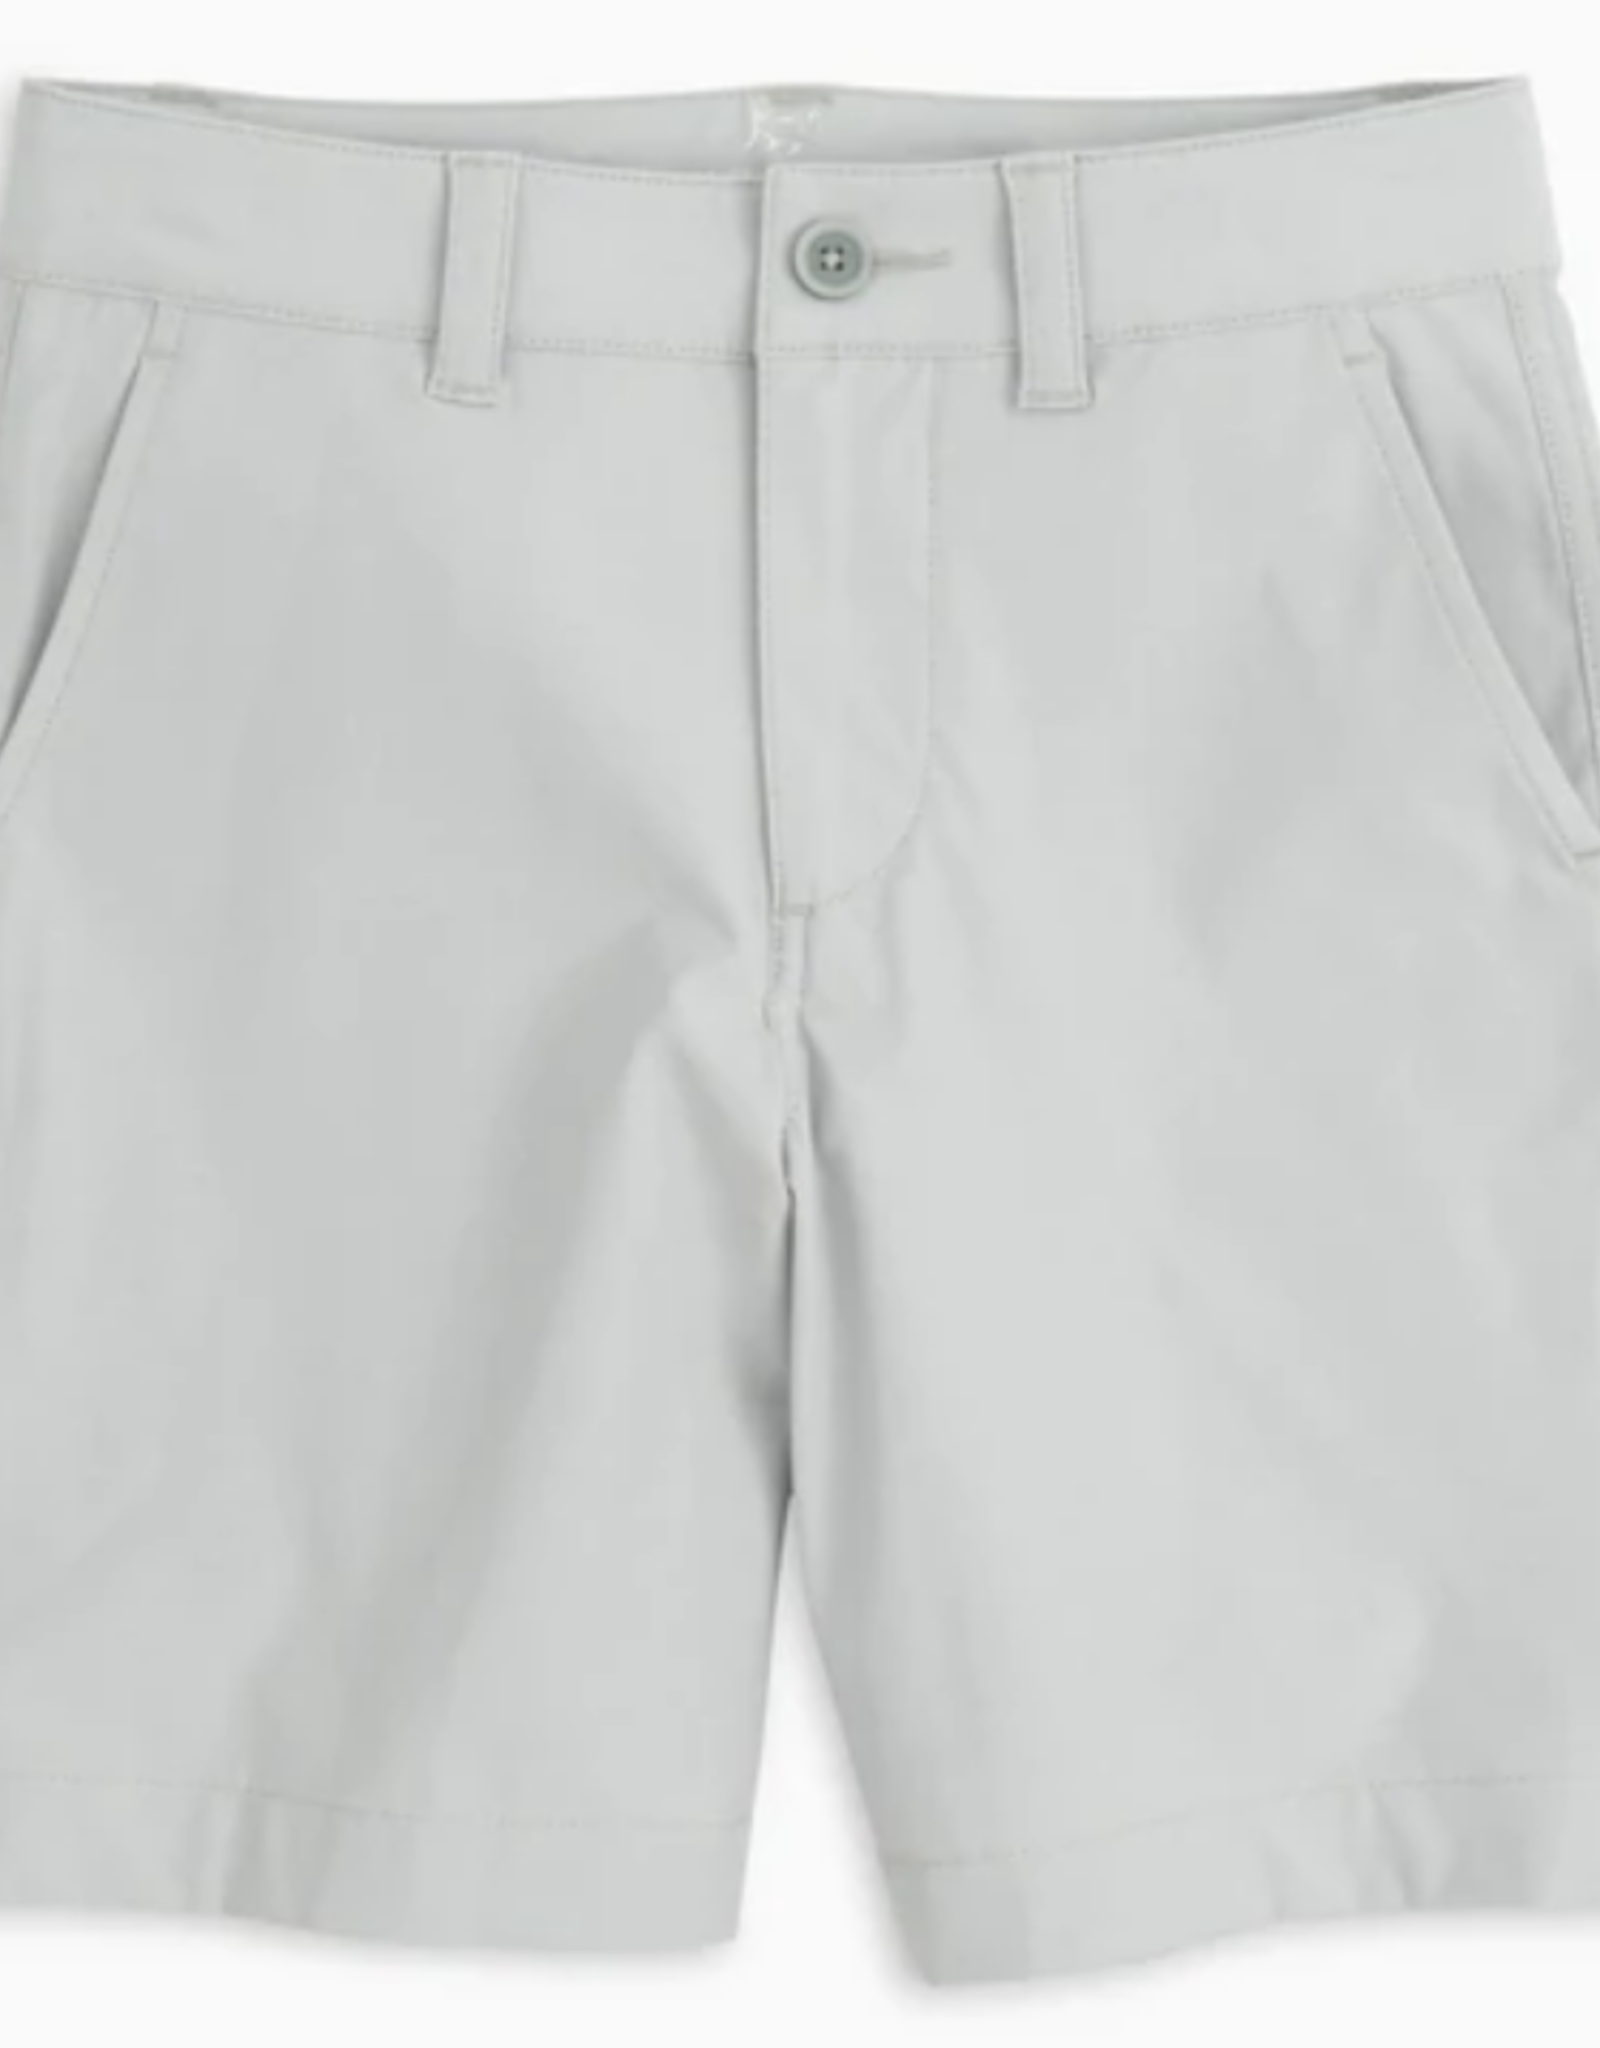 Southern Tide Seagull Grey T3 Gulf Shorts